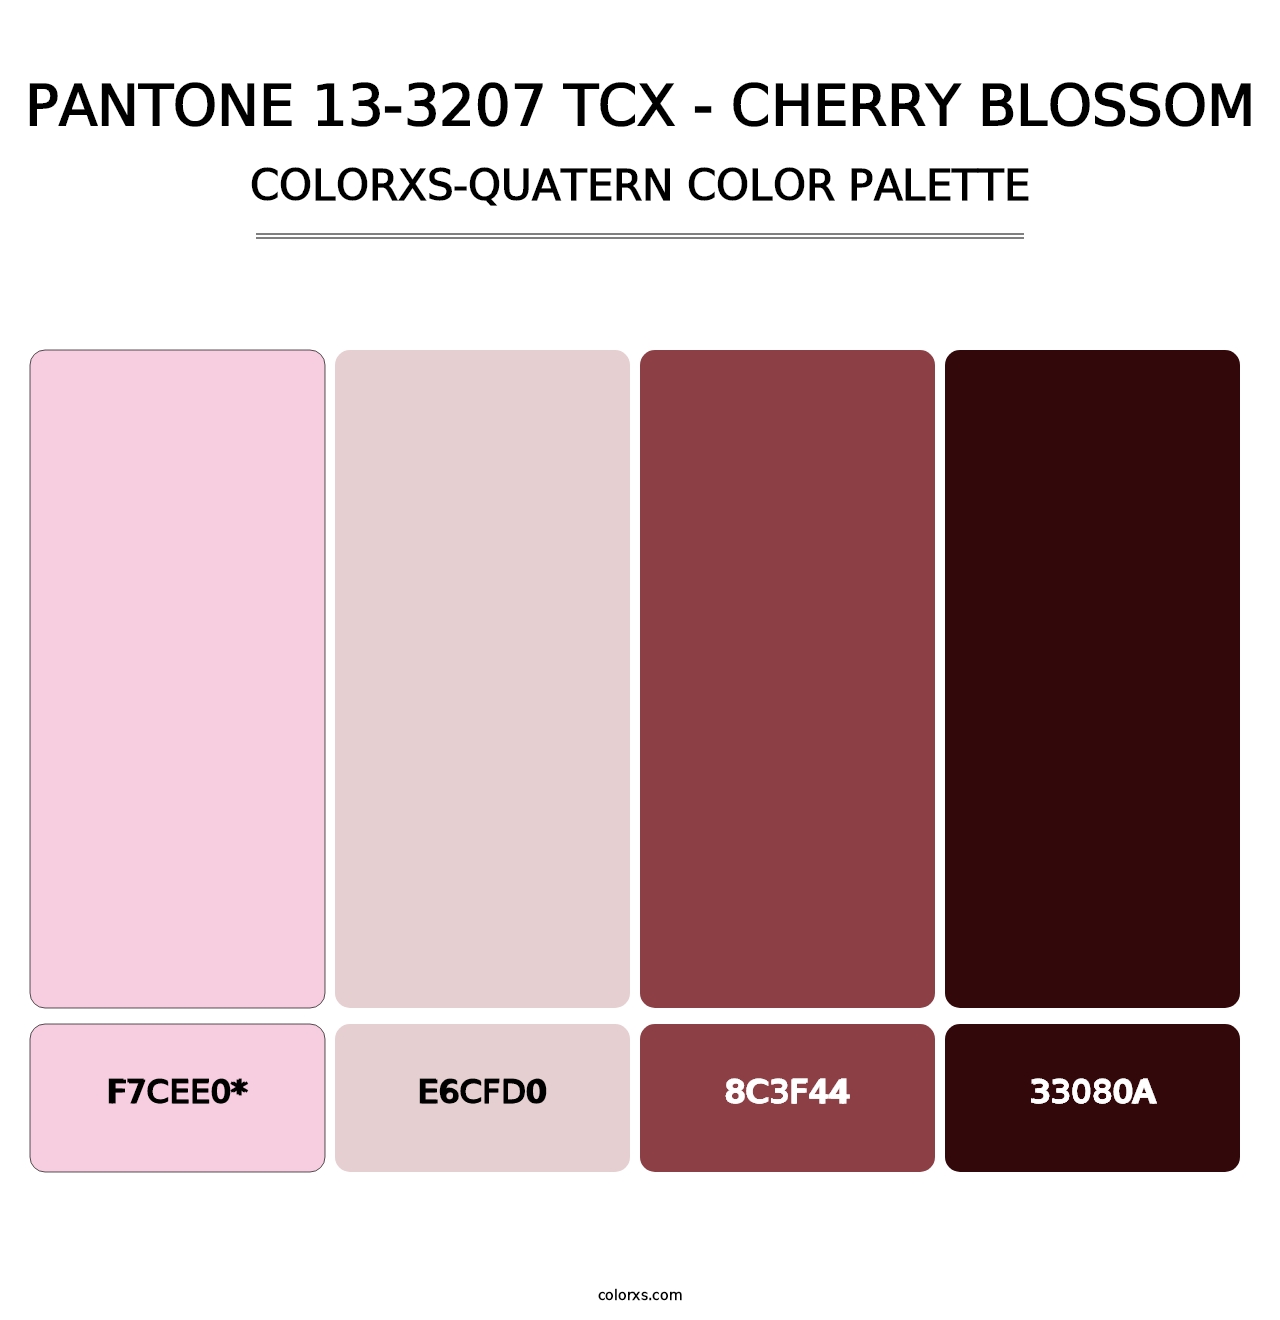 PANTONE 13-3207 TCX - Cherry Blossom - Colorxs Quatern Palette